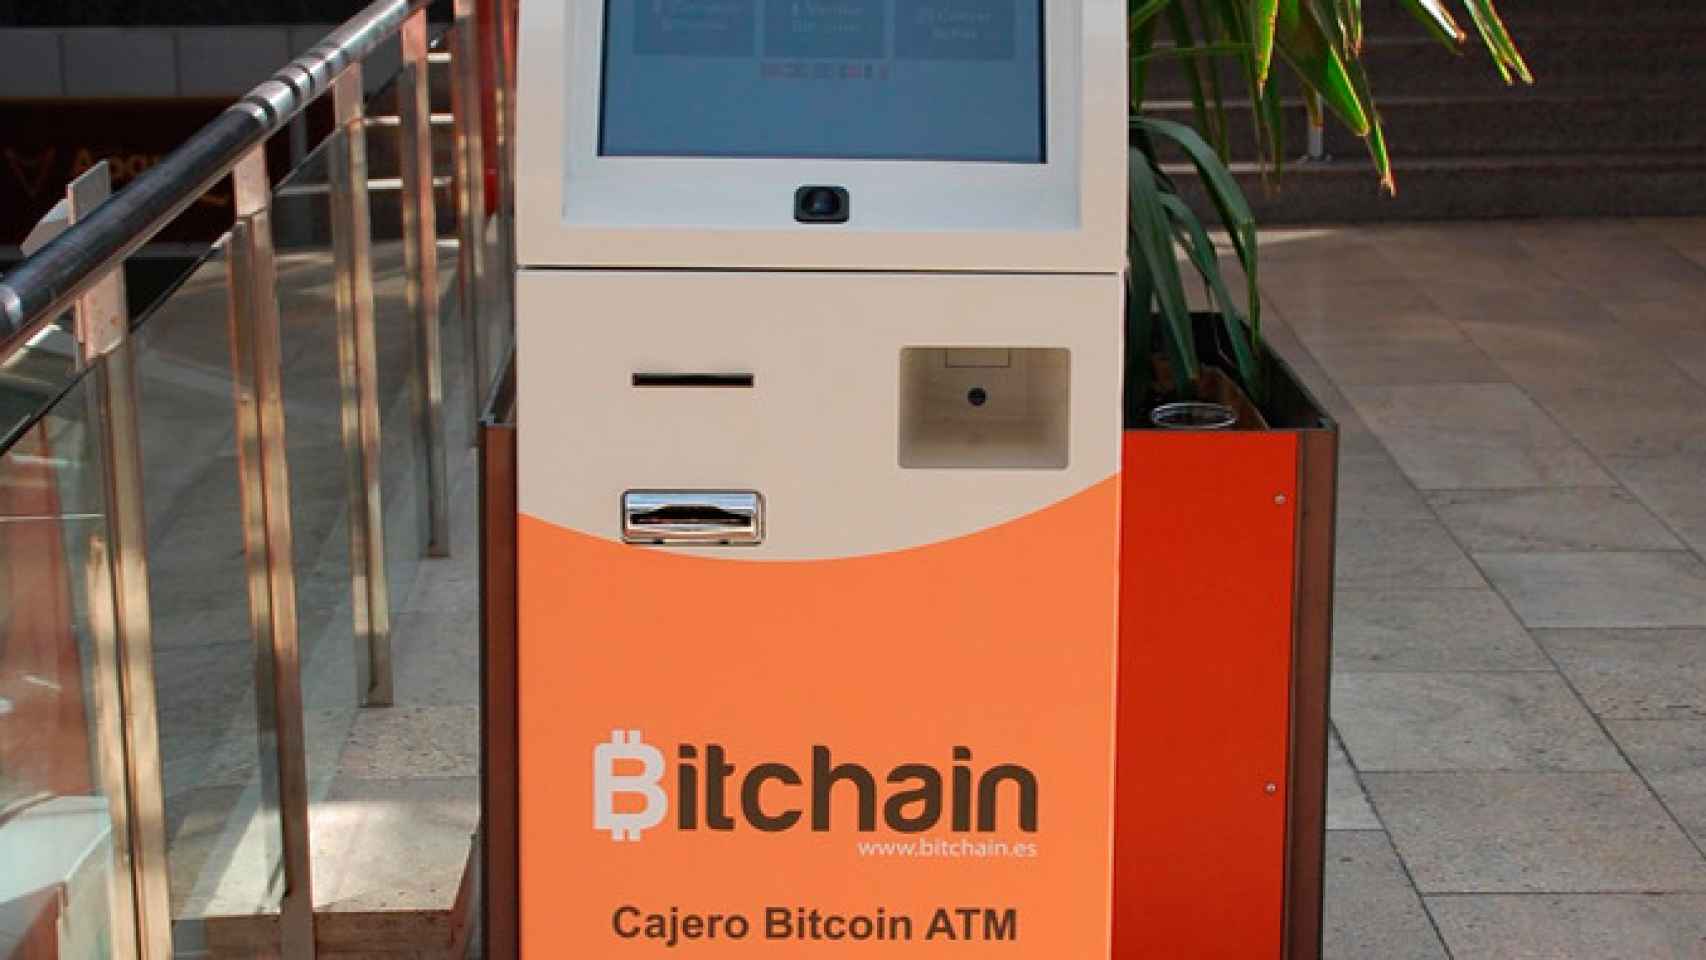 Cajero de Bitchain para cambiar euros por 'bitcoins' / TWITTER